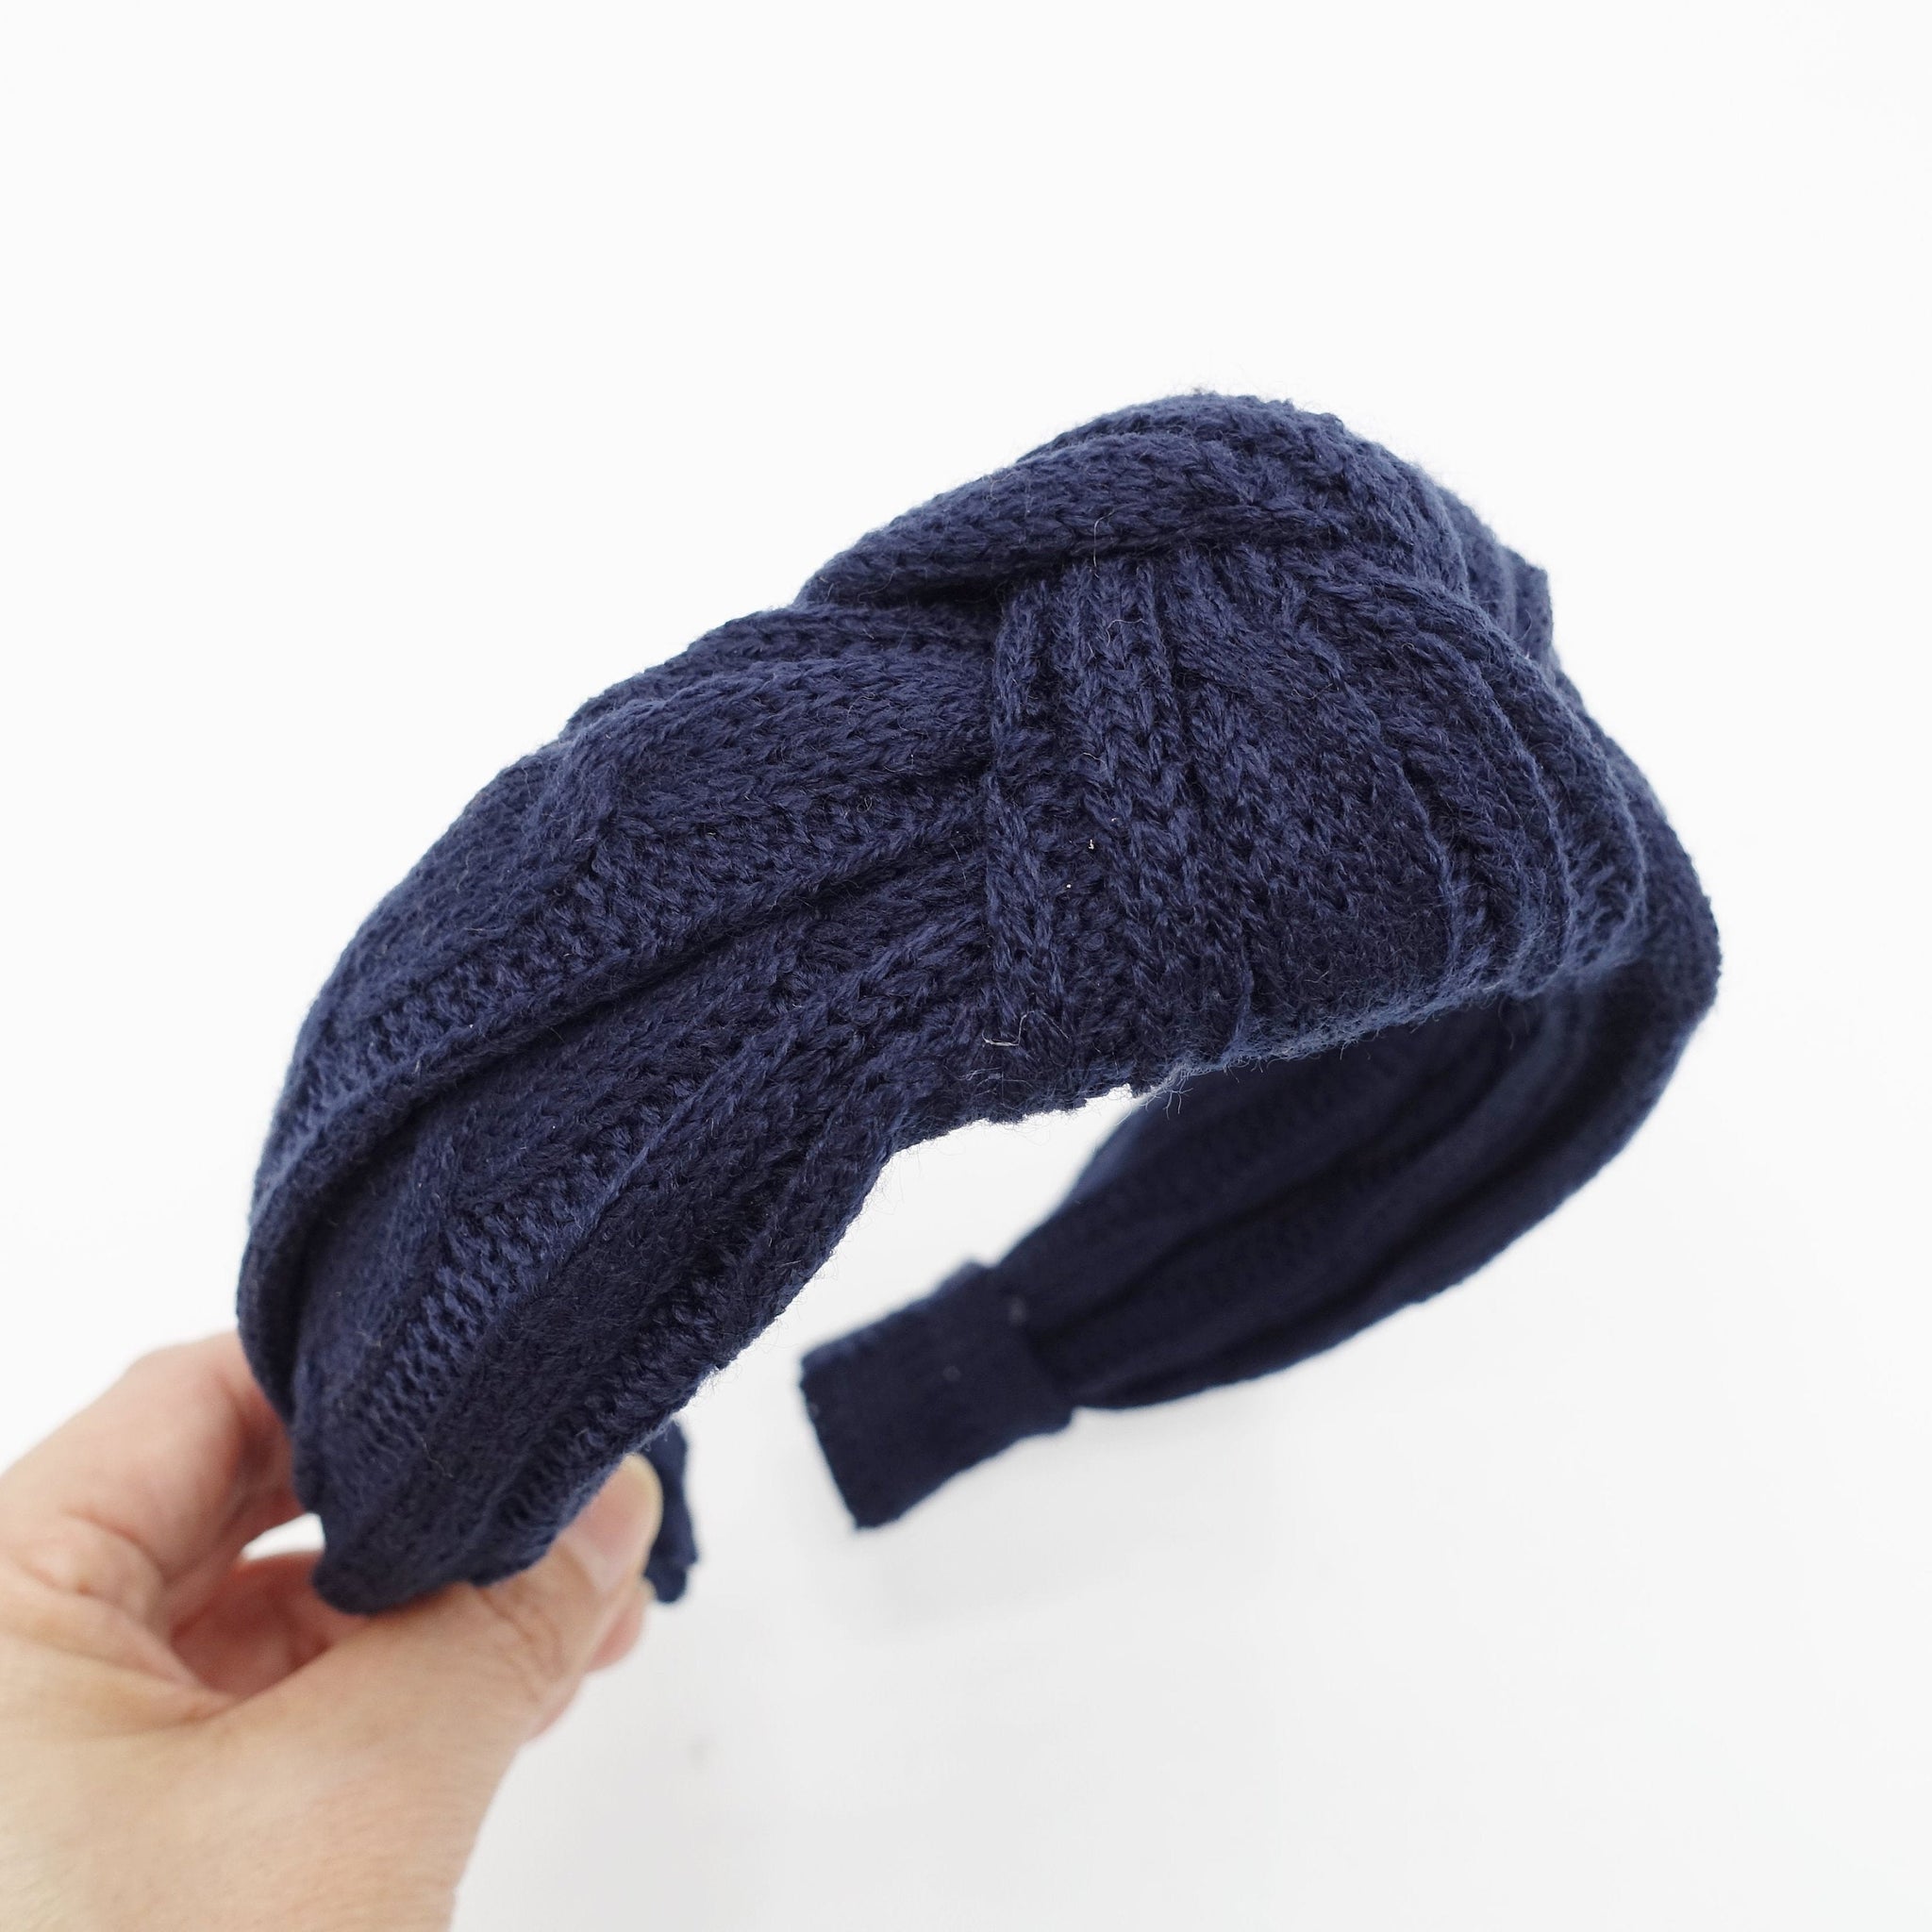 veryshine.com Headband Navy cable knit pattern headband top knot hairband hair accessories